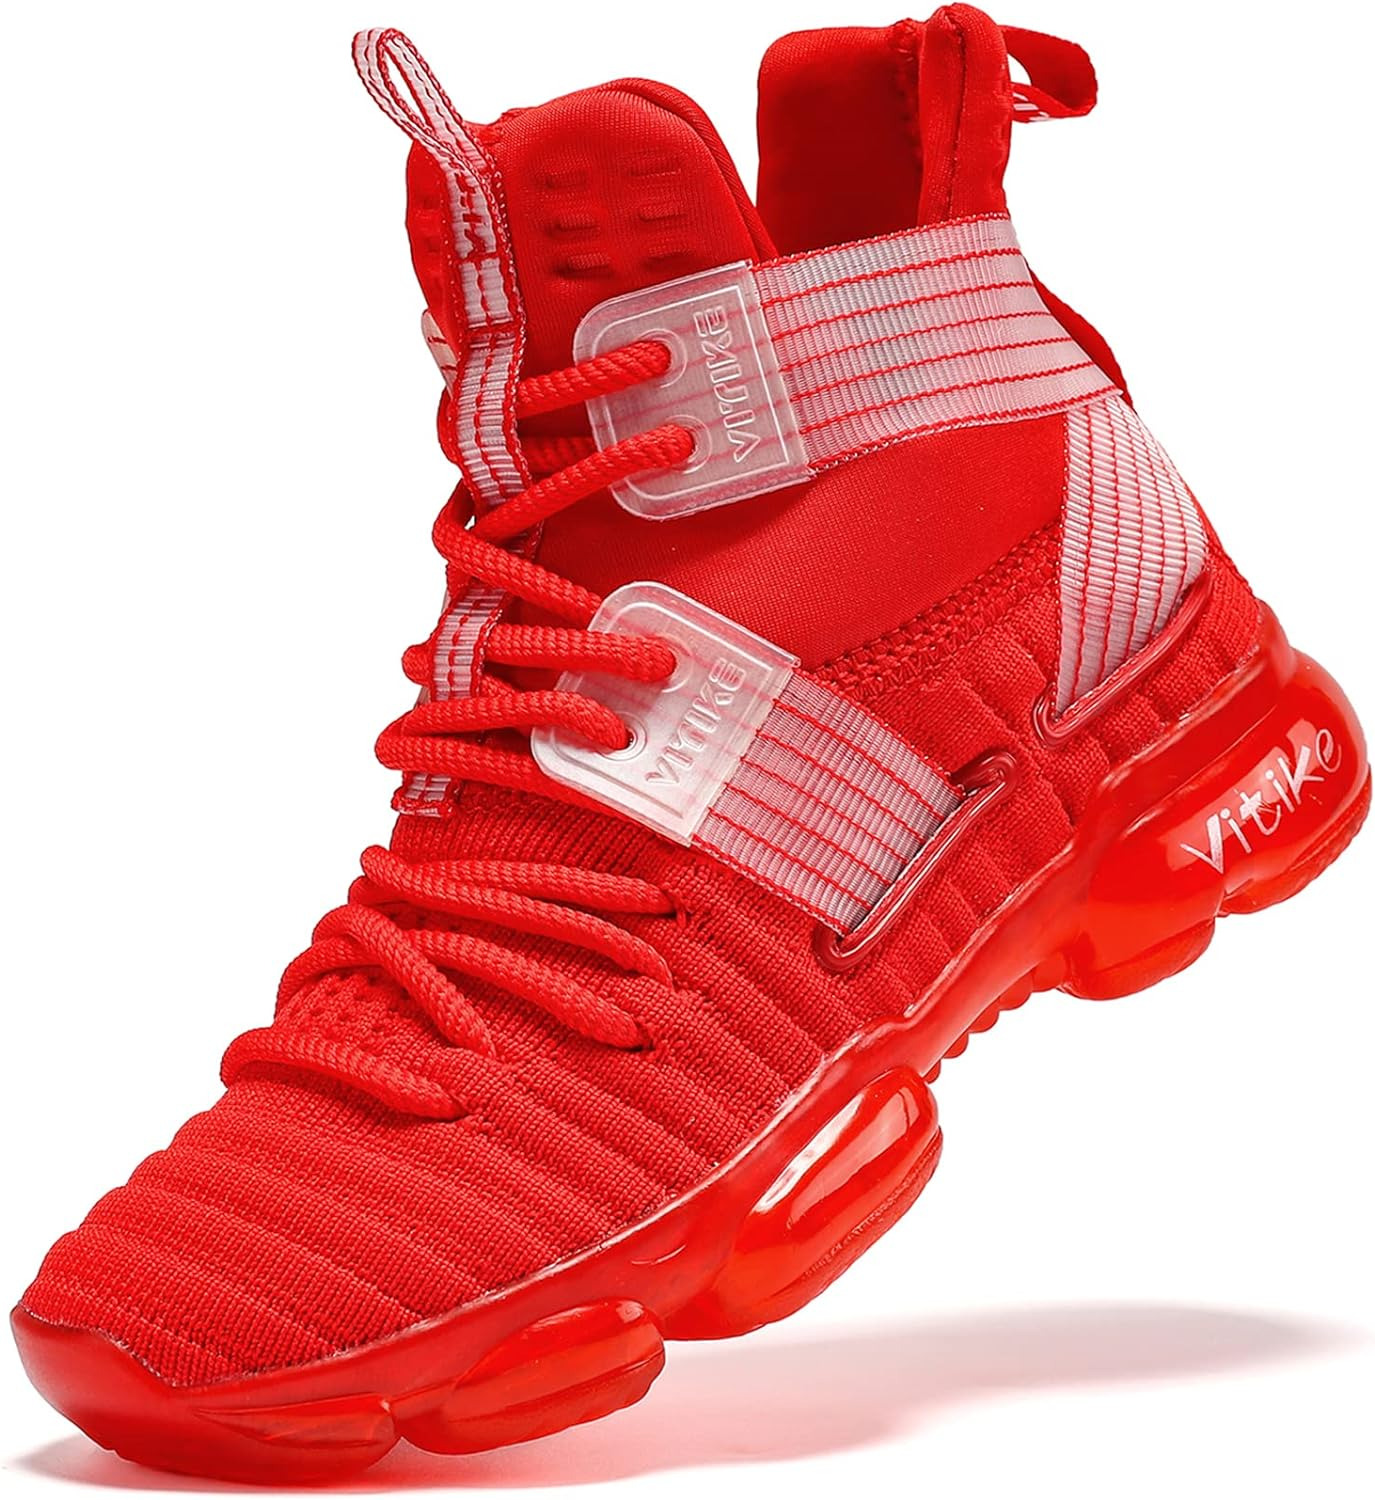 Astonishing Kids Basketball Shoes Boys Air Cushion Sneakers Girls Mid Top School Training Sh on eBay